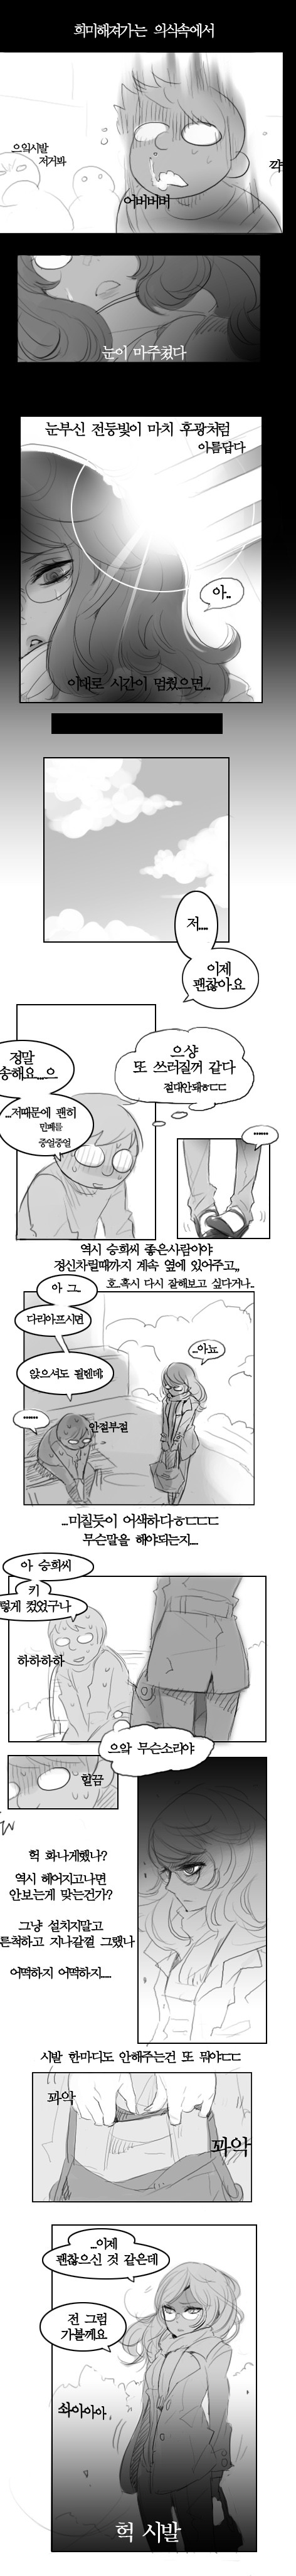 [(asdf)] Oh nan-hee - Chapter 2 [ㅁㄴㅇㄹ] 오난희 - 2부